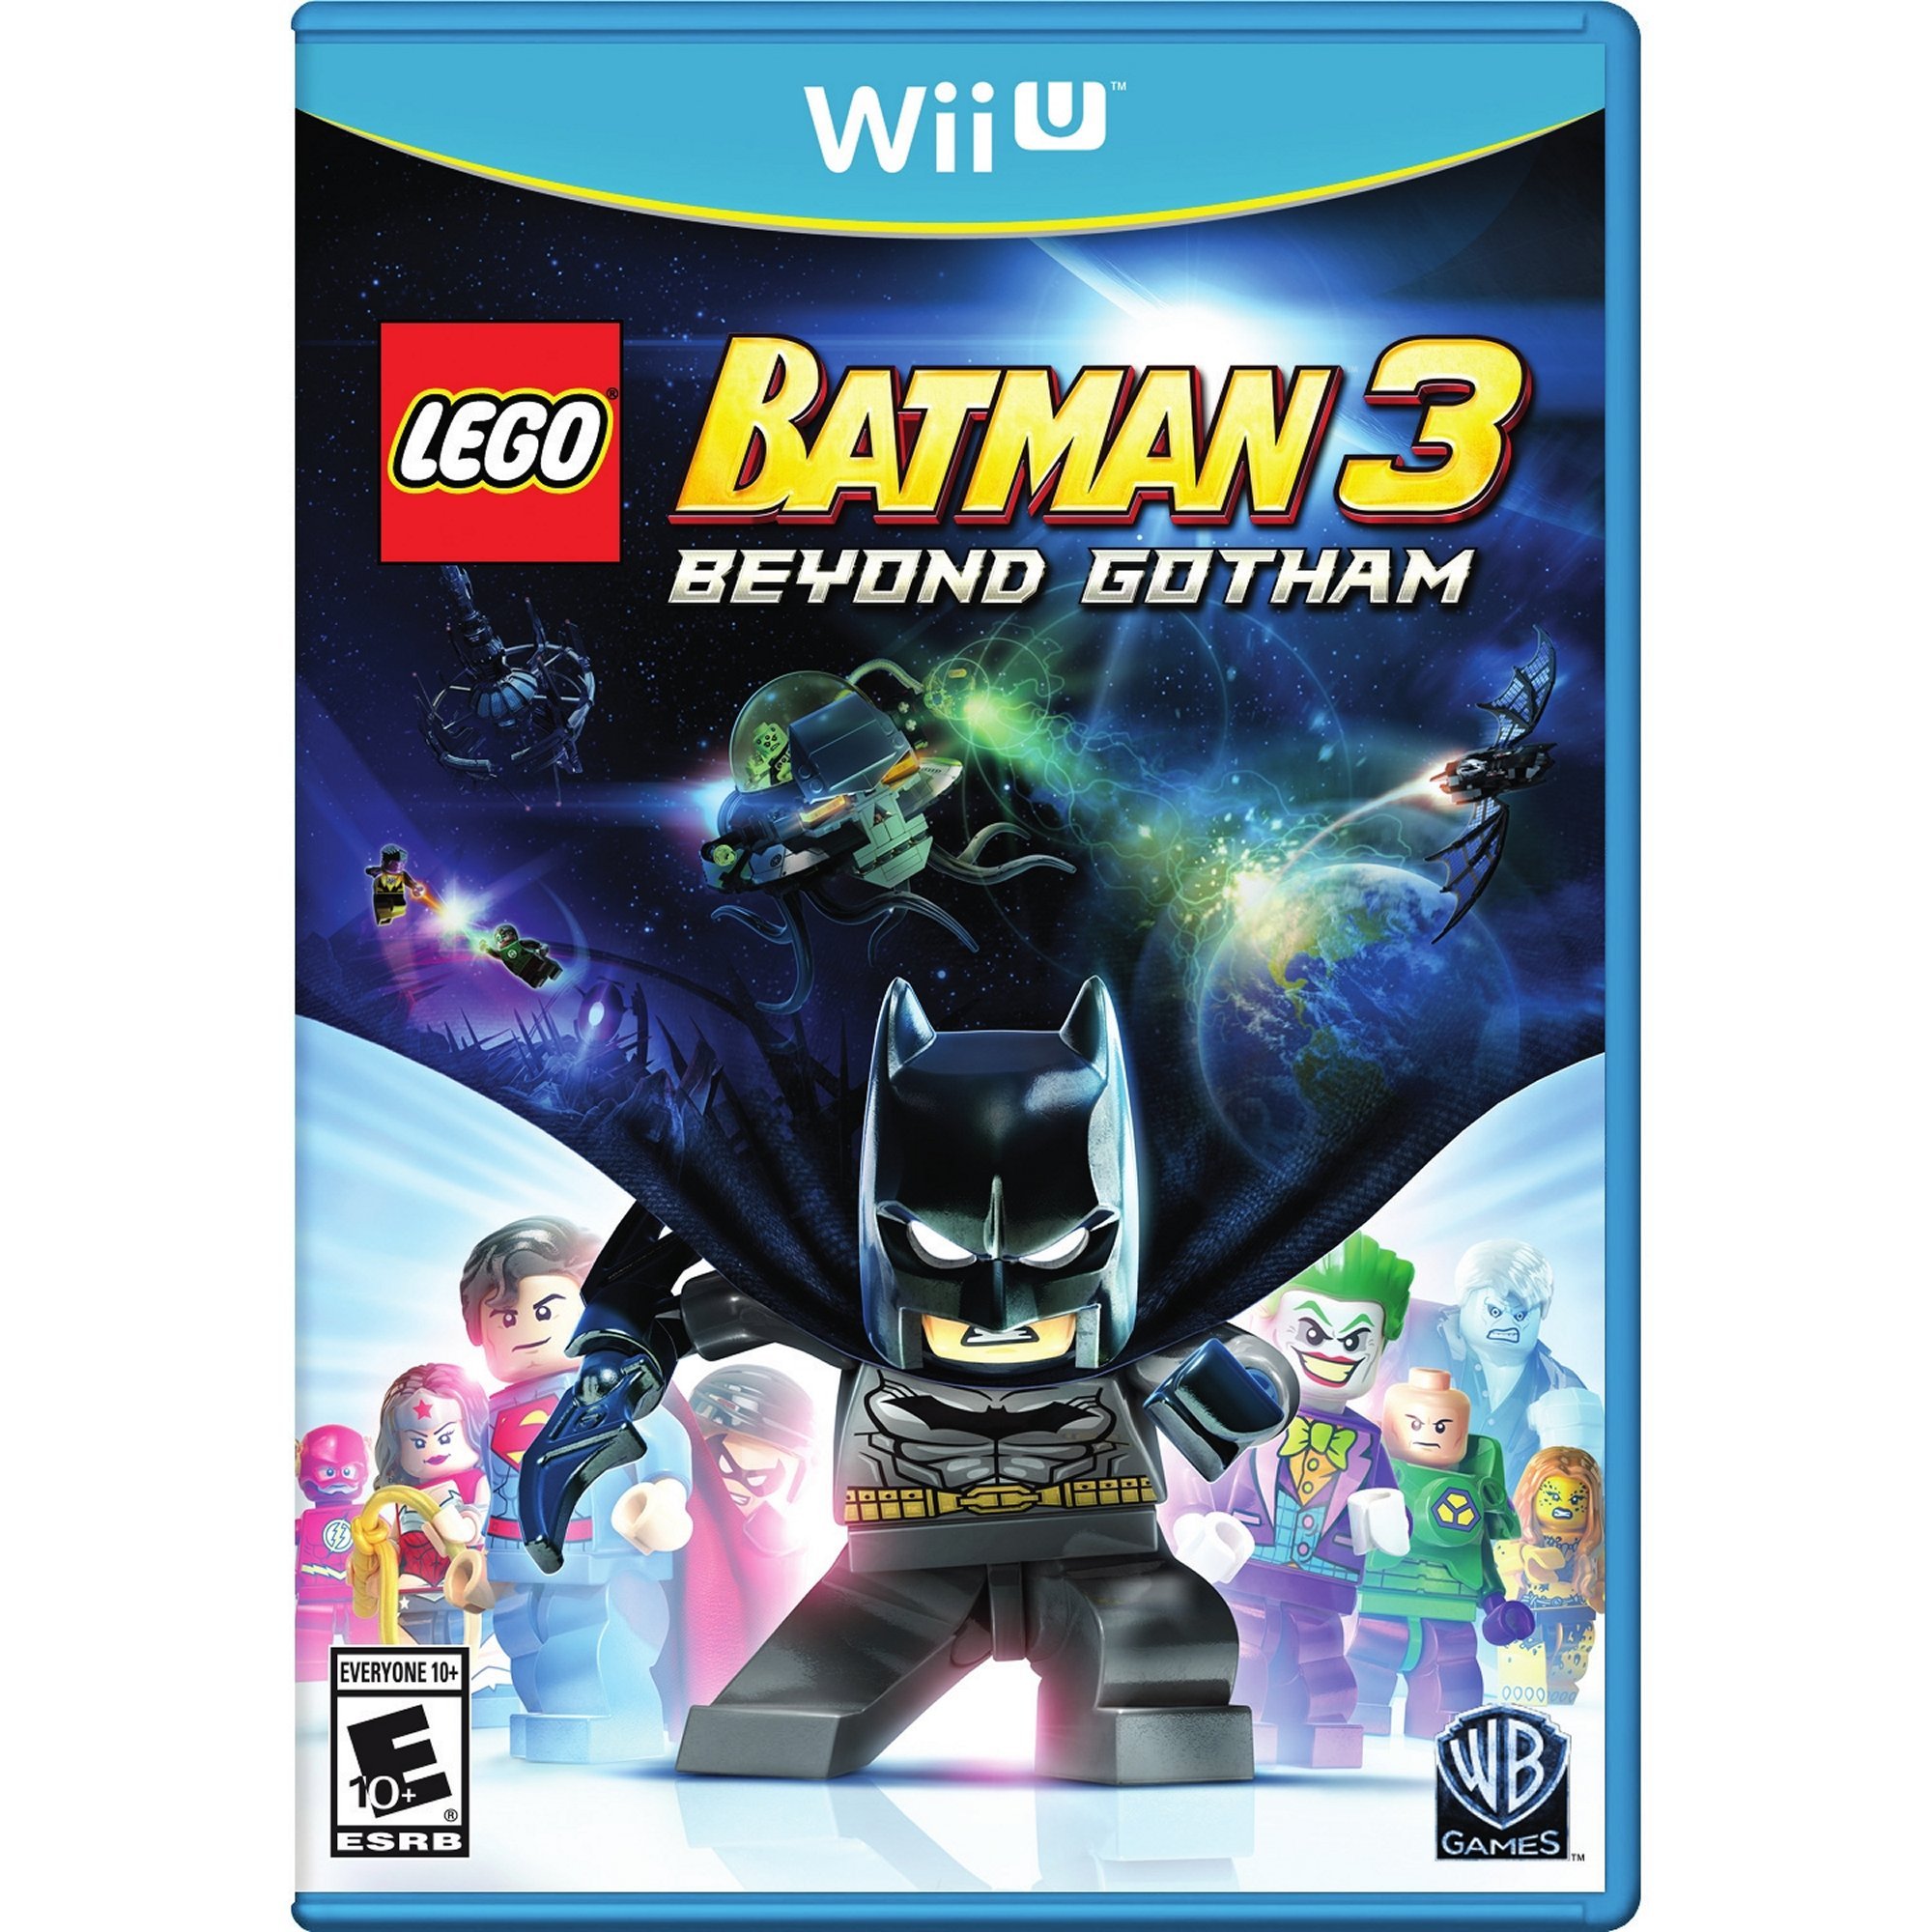 Mua LEGO Batman 3: Beyond Gotham - Wii U trên Amazon Mỹ chính hãng 2023 |  Fado